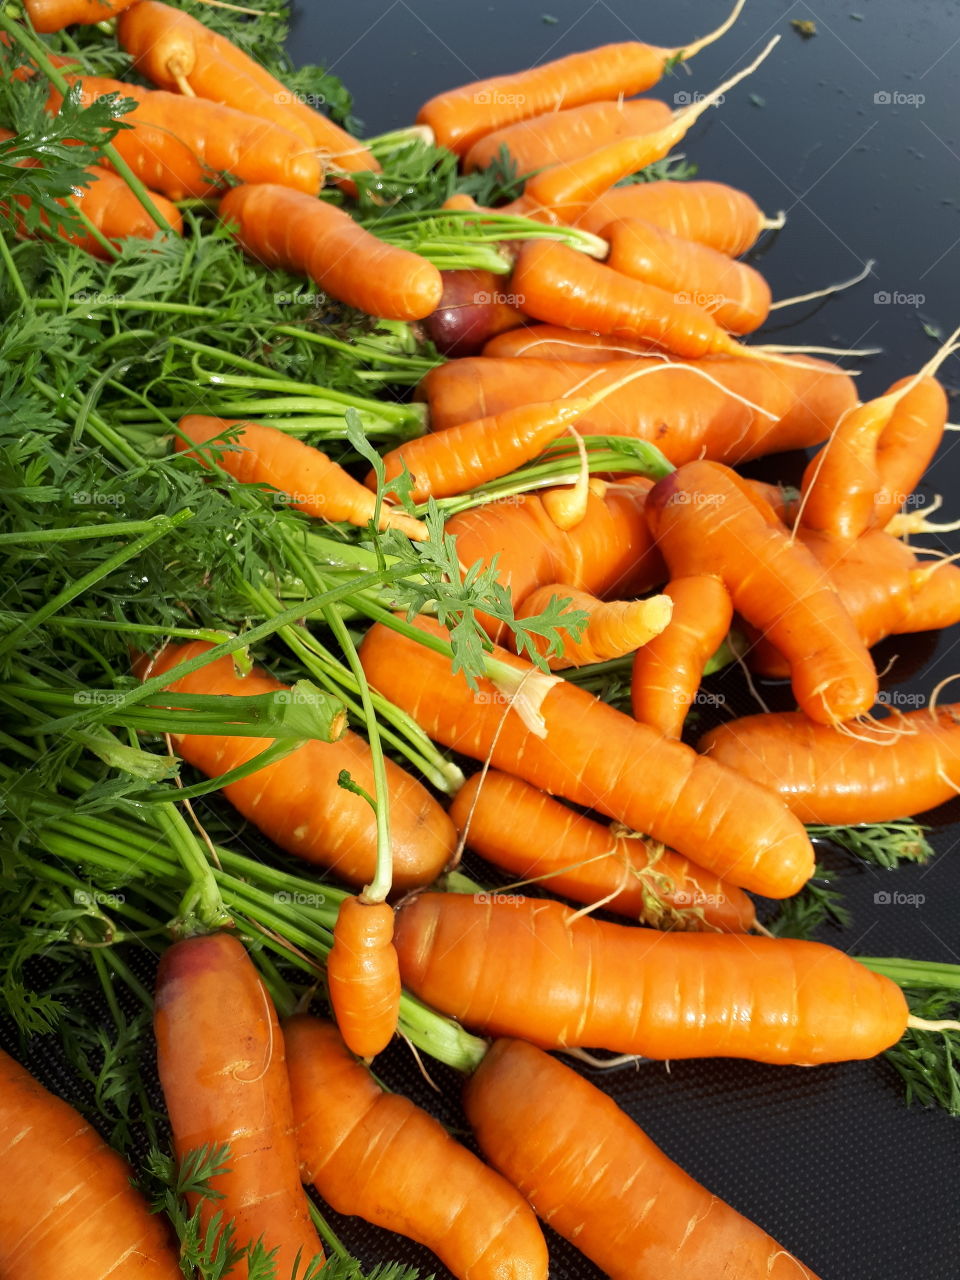 Freshly dug washed delicious garden carrots.